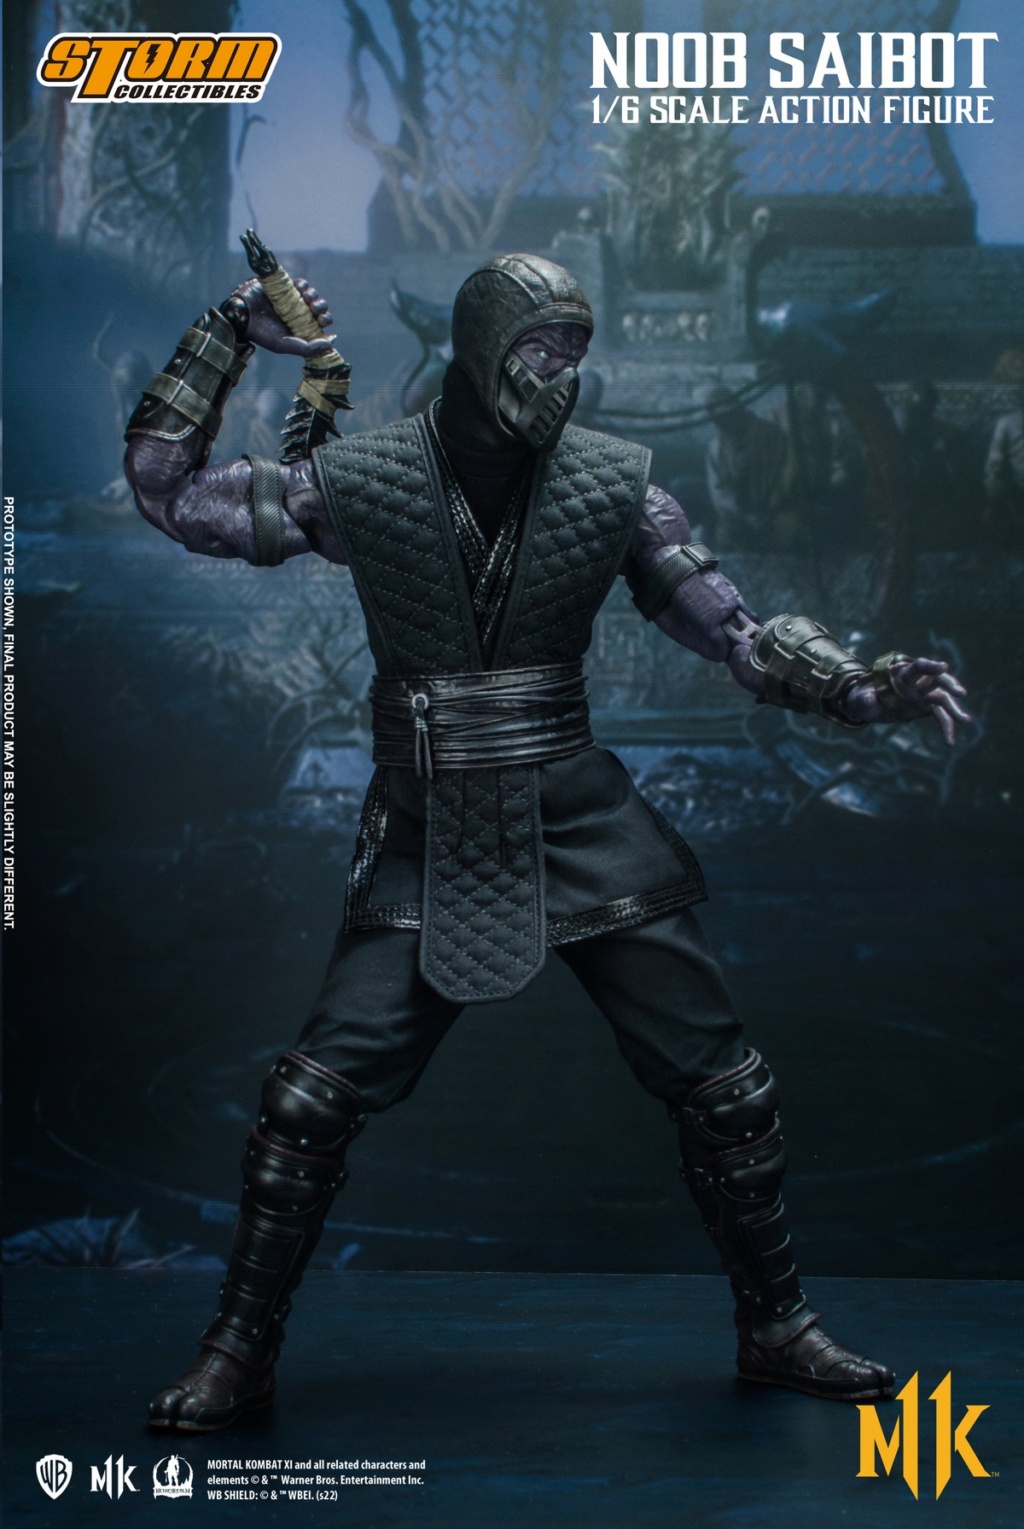 movie-based - NEW PRODUCT: Storm Toys: 1/6 Mortal Kombat - NOOB SAIBOT Action Figure 11412111